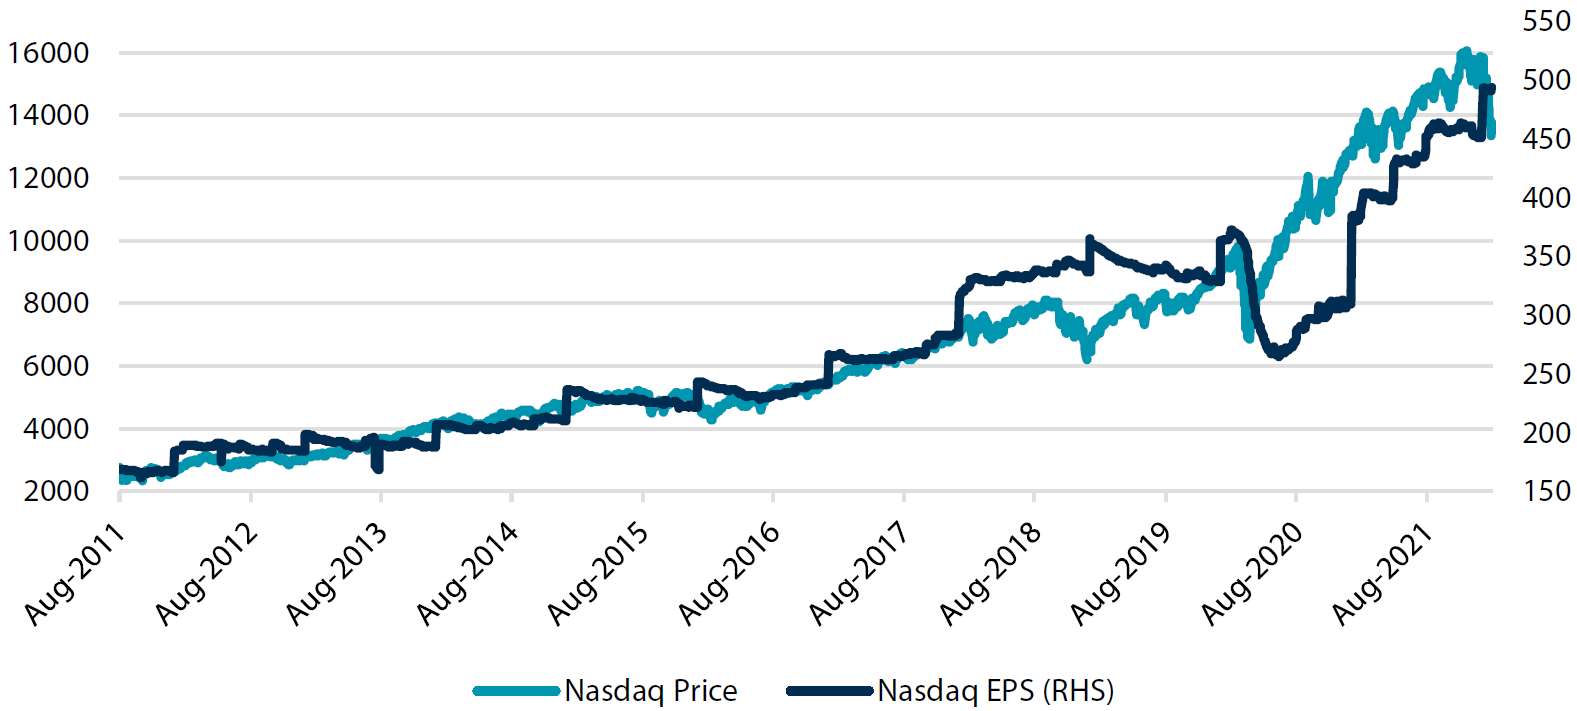 Nasdaq price versus earnings